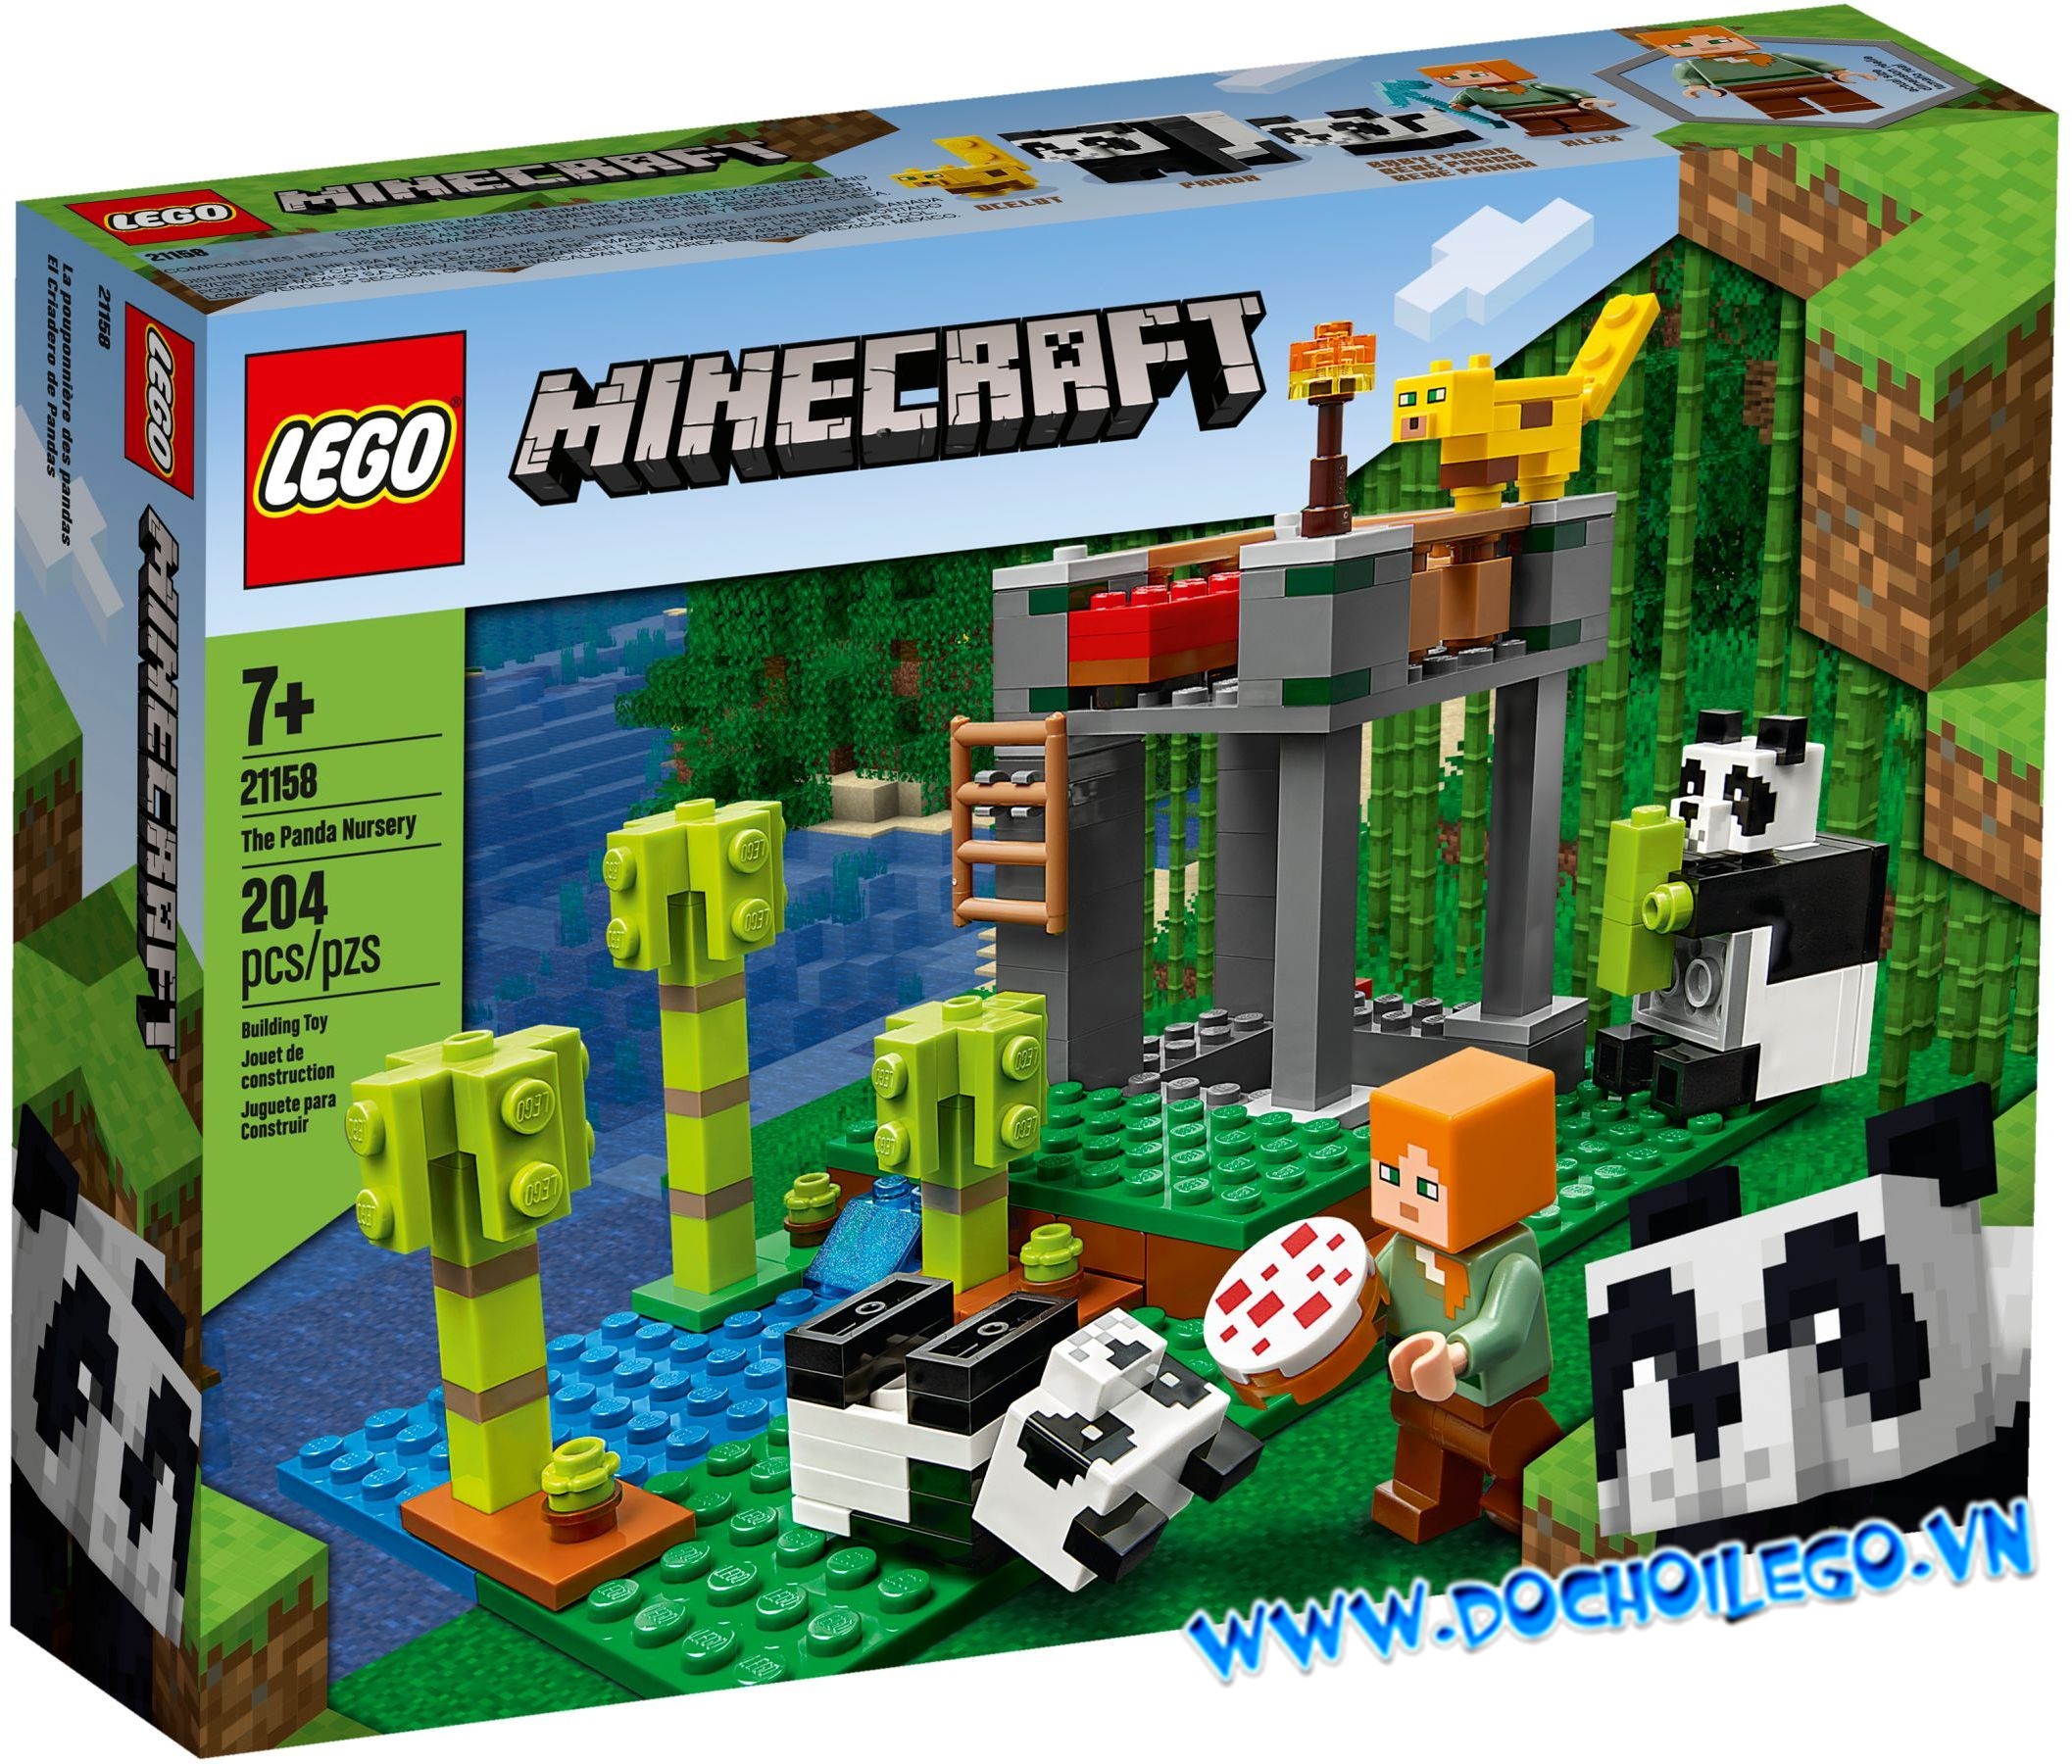 ❤️  21158 LEGO minecraft The Panda Nursery - Nơi nuôi dưỡng chú gấu Panda